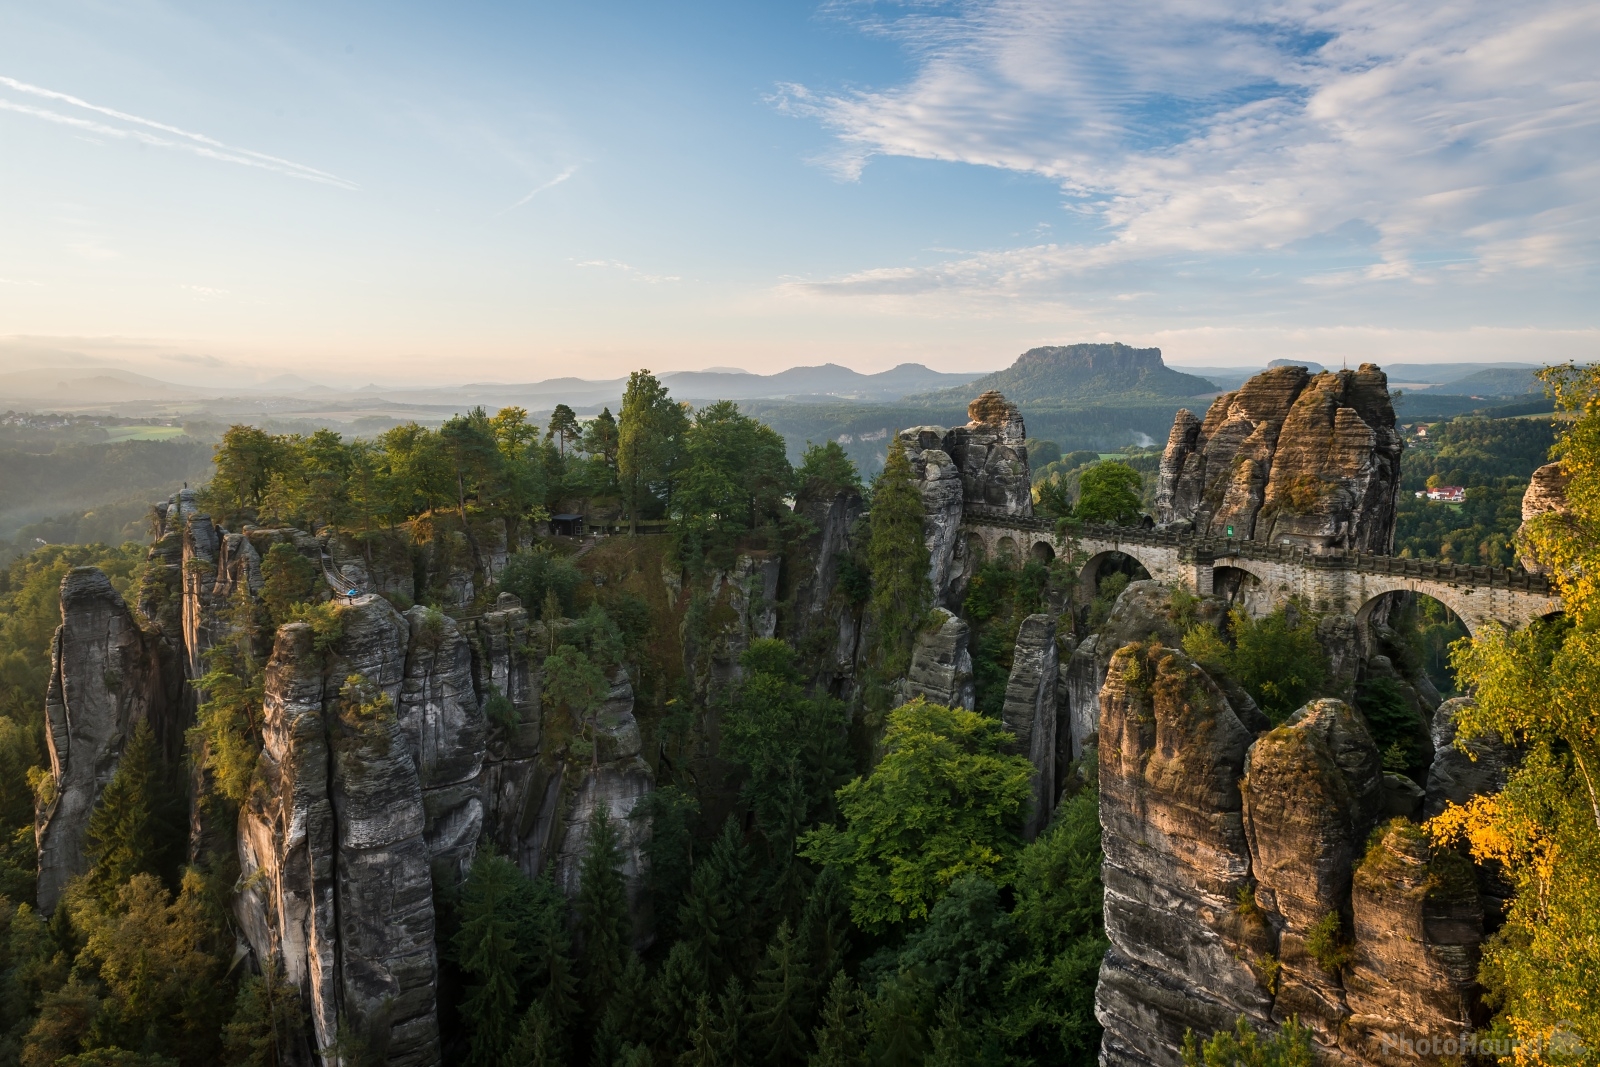 Image of Bastei viewpoint (Ferdinandaussicht) by VOJTa Herout